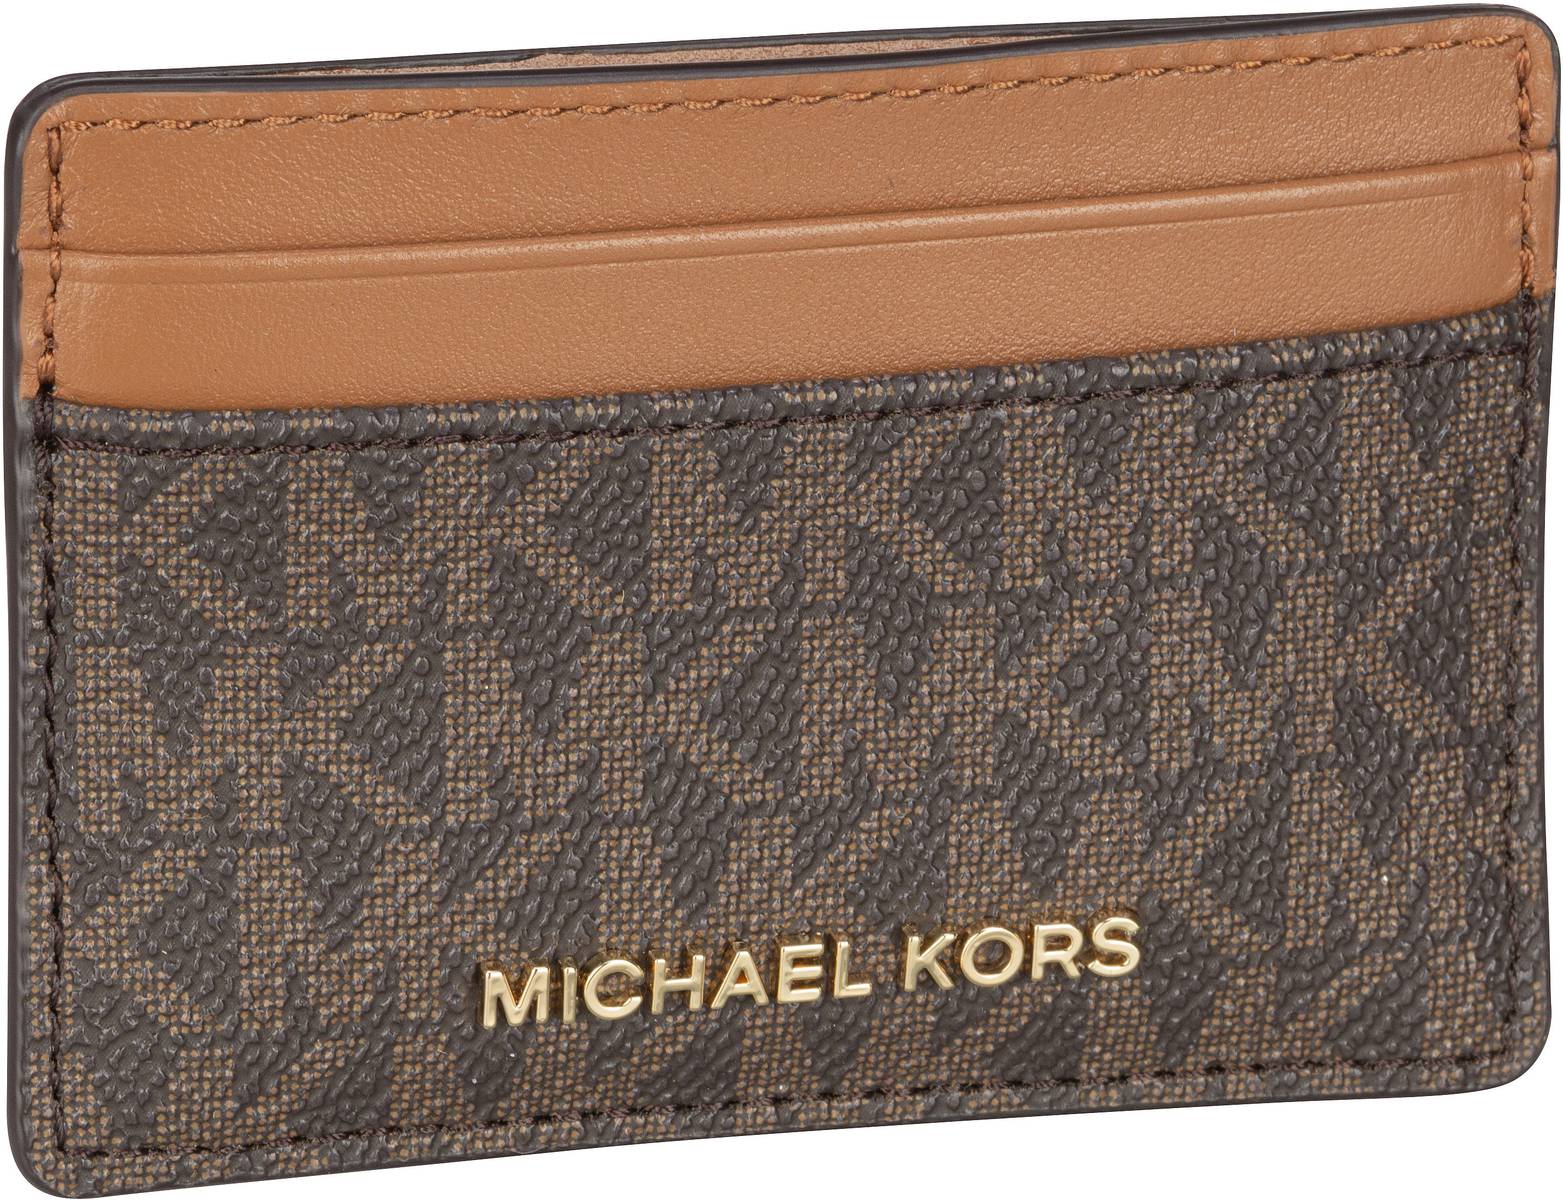 Michael Kors Jet Set Card Holder MK Signature - Brown